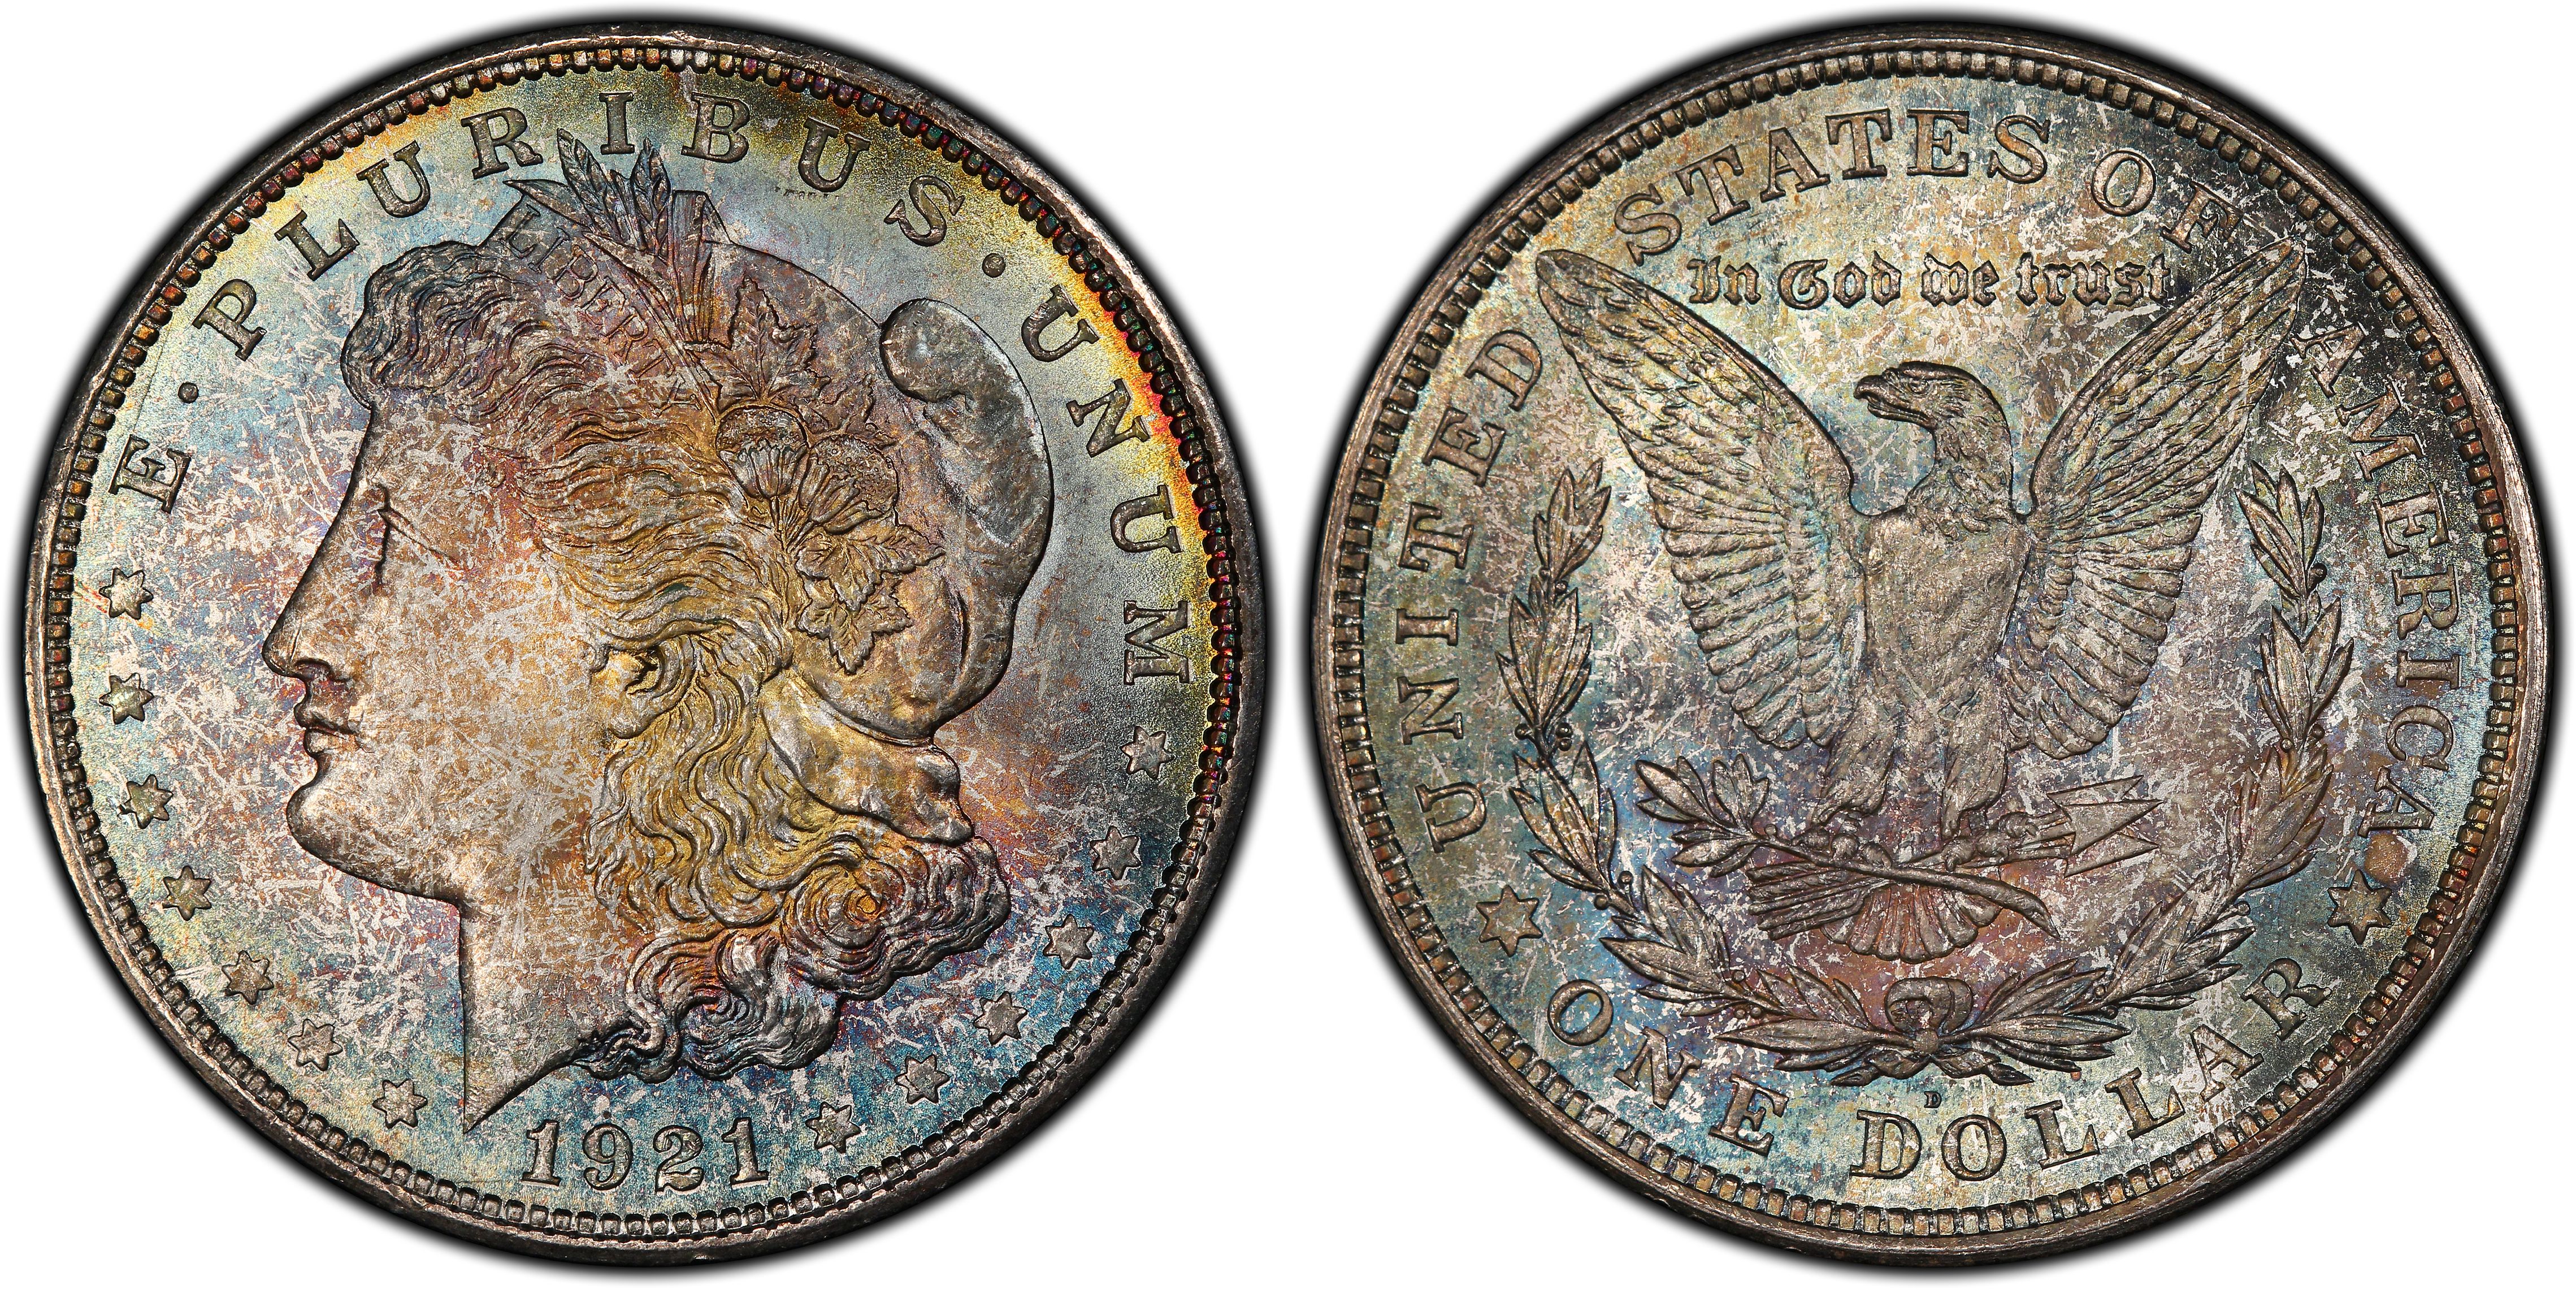 File:Moneda de 1 dólar USA 1921.jpg - Wikimedia Commons